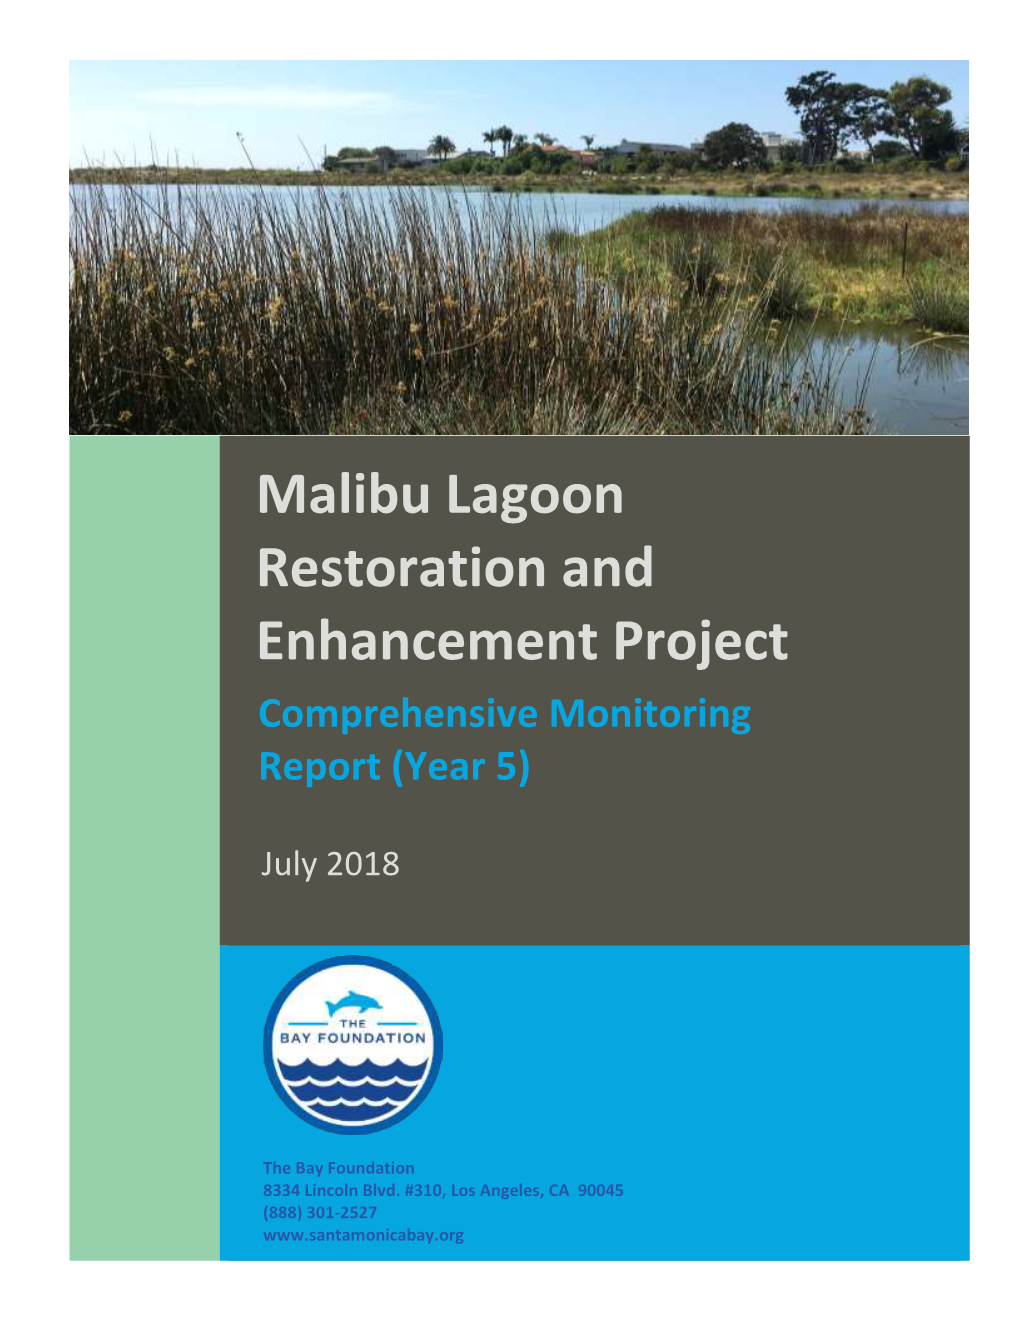 Malibu Lagoon Comprehensive Monitoring Report, July 2018